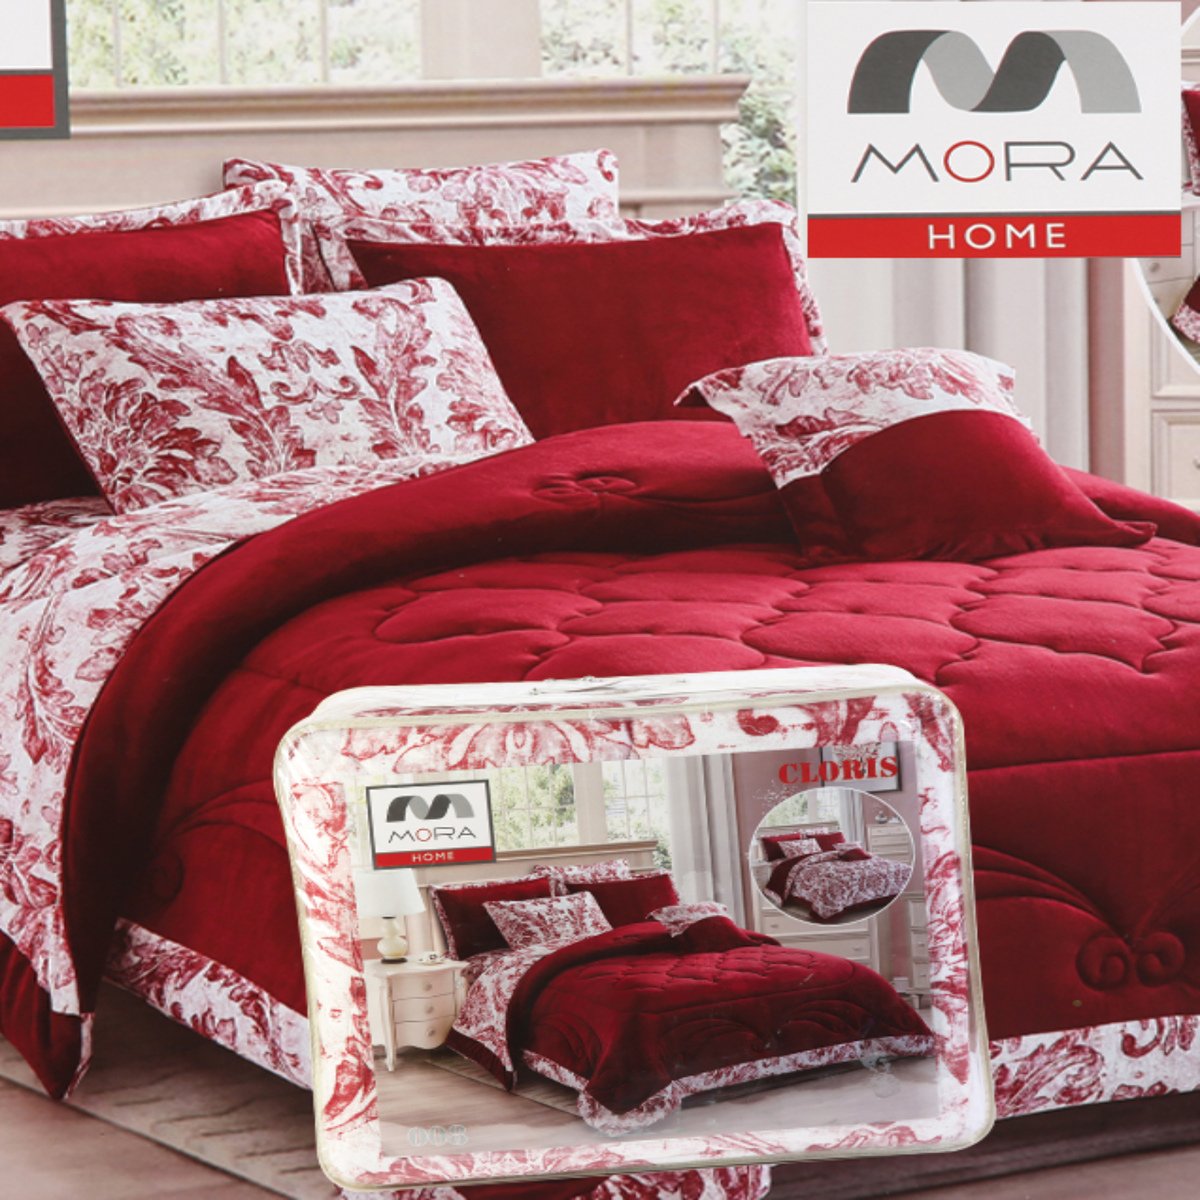 Mora Flannel Comforter King 6Pcs Set Assorted Colors & Designs